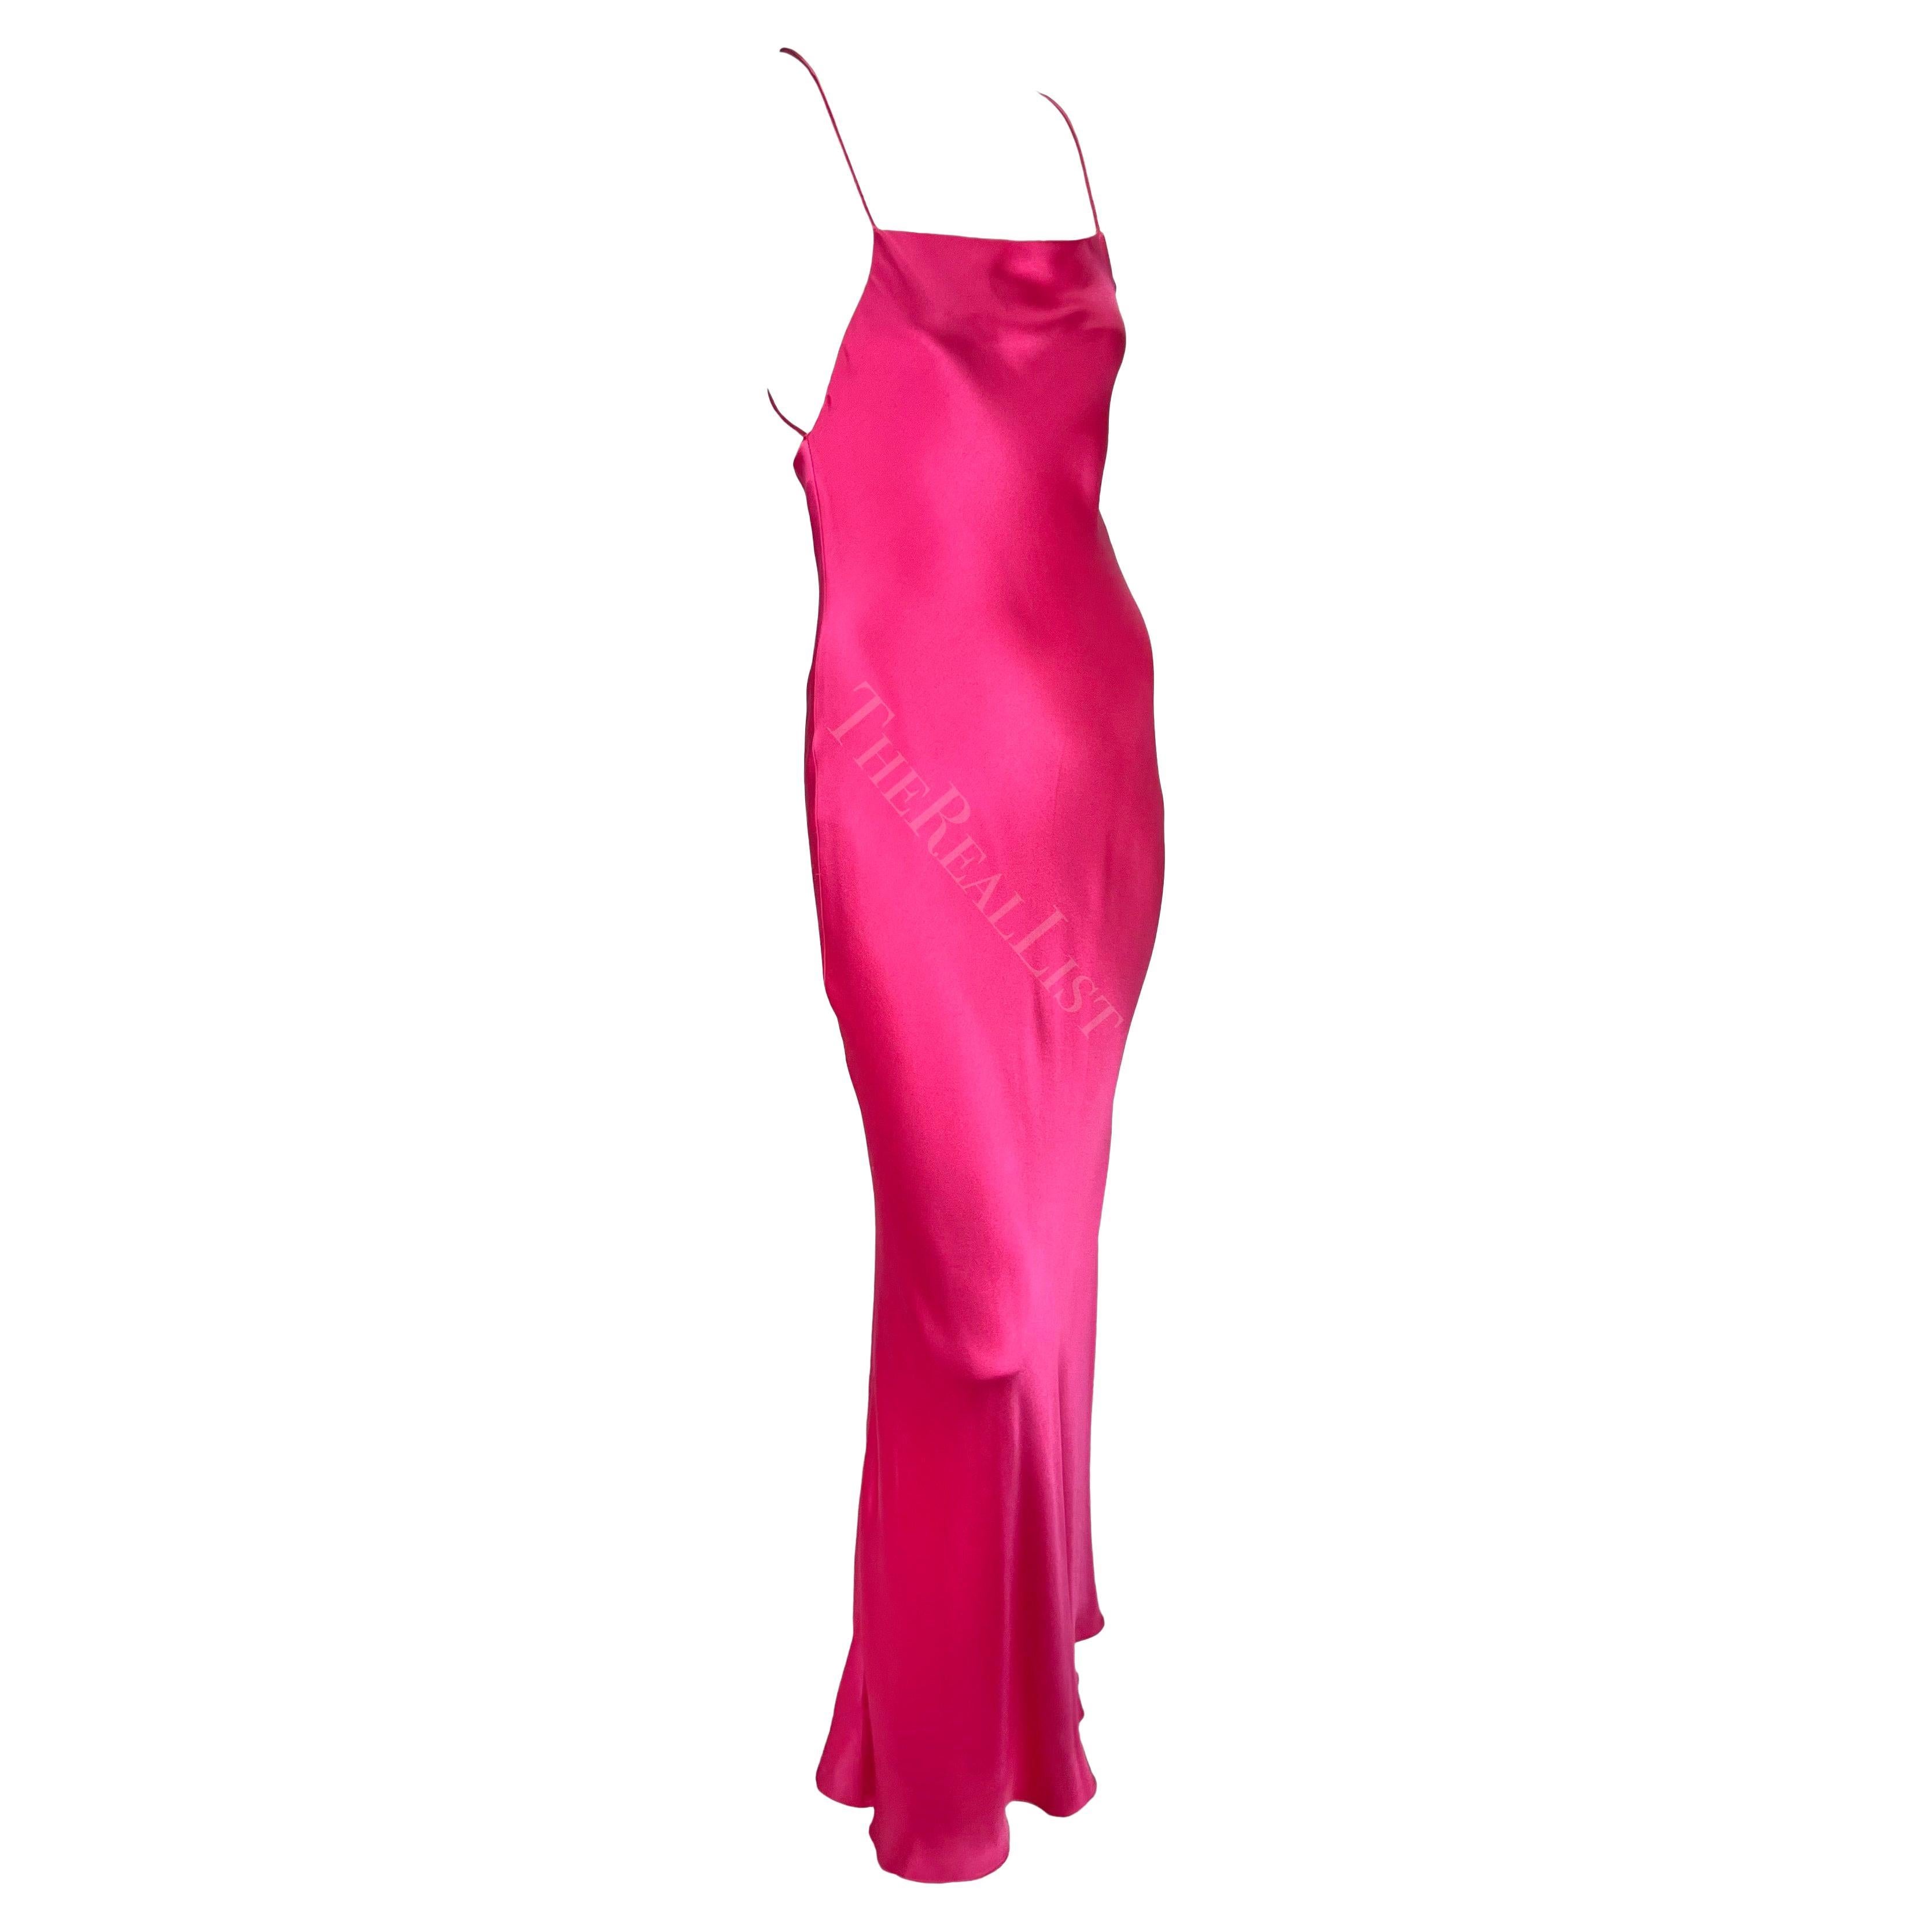 S/S 2004 Ralph Lauren Runway Hot Pink Silk Satin Backless Slip Gown  For Sale 4